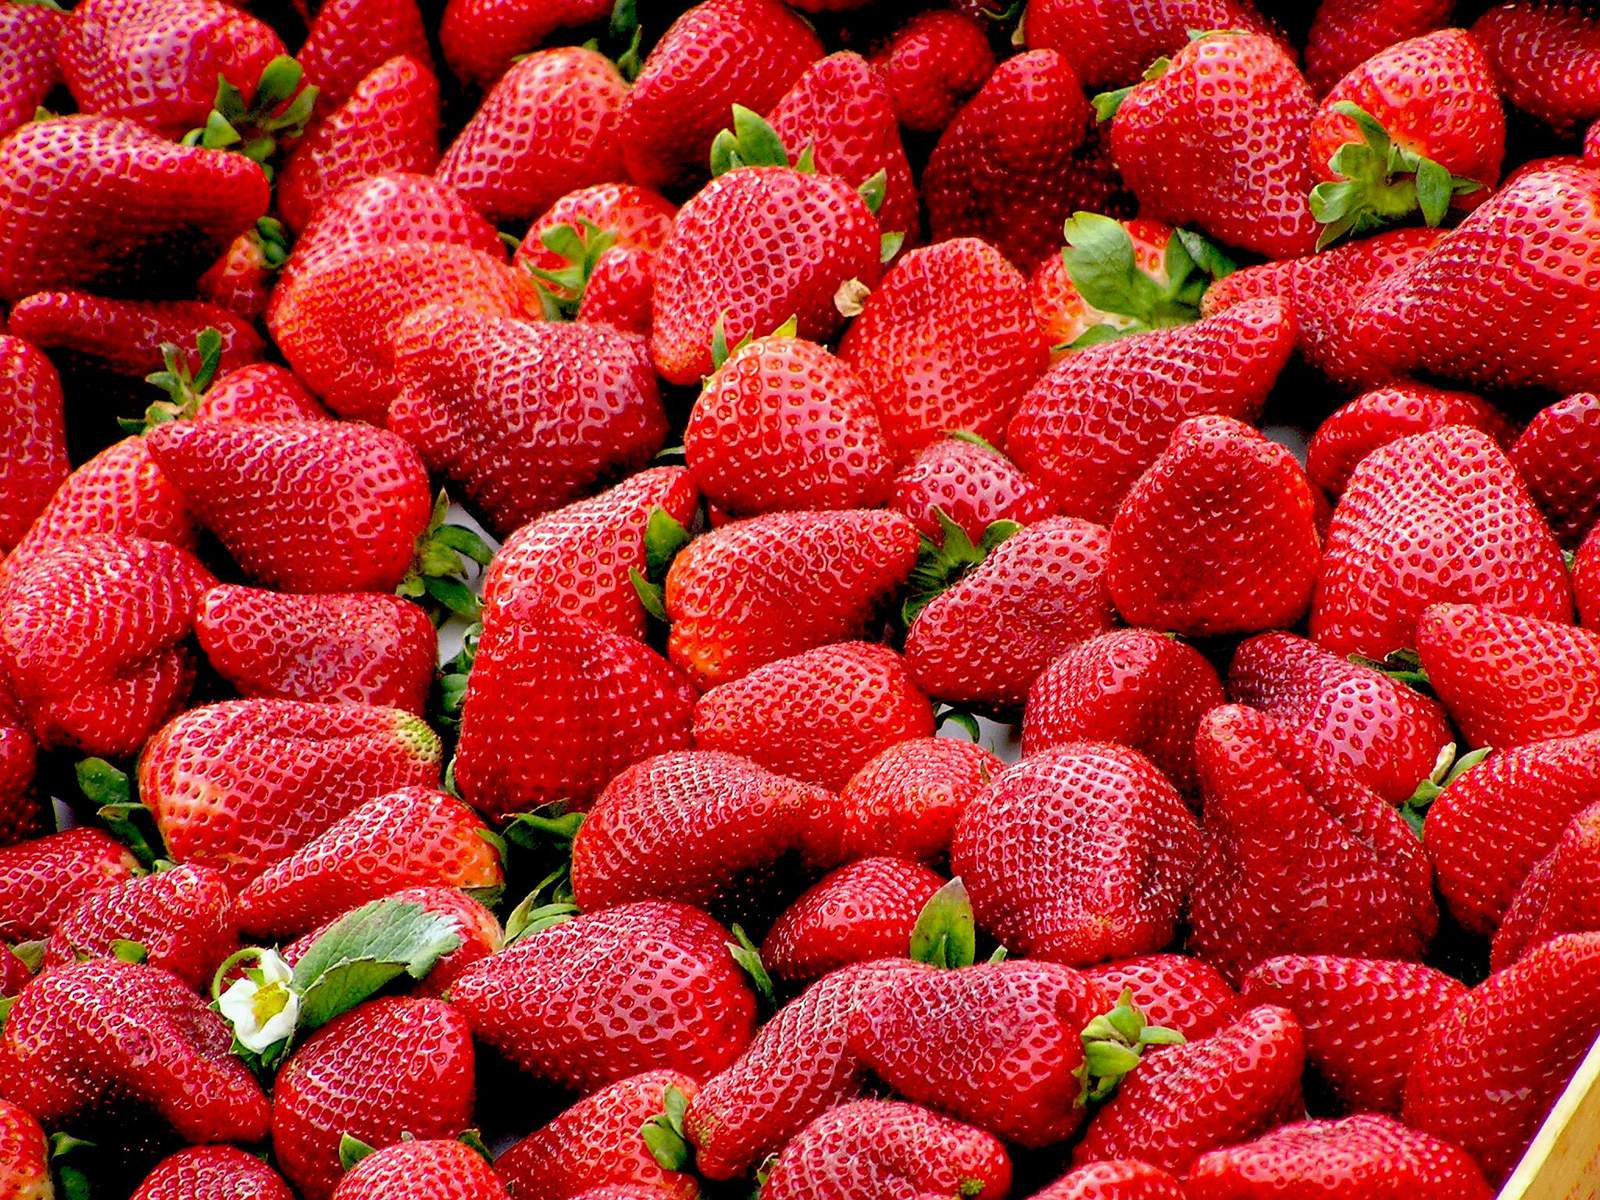 Strawberry picking season starting in Central Florida